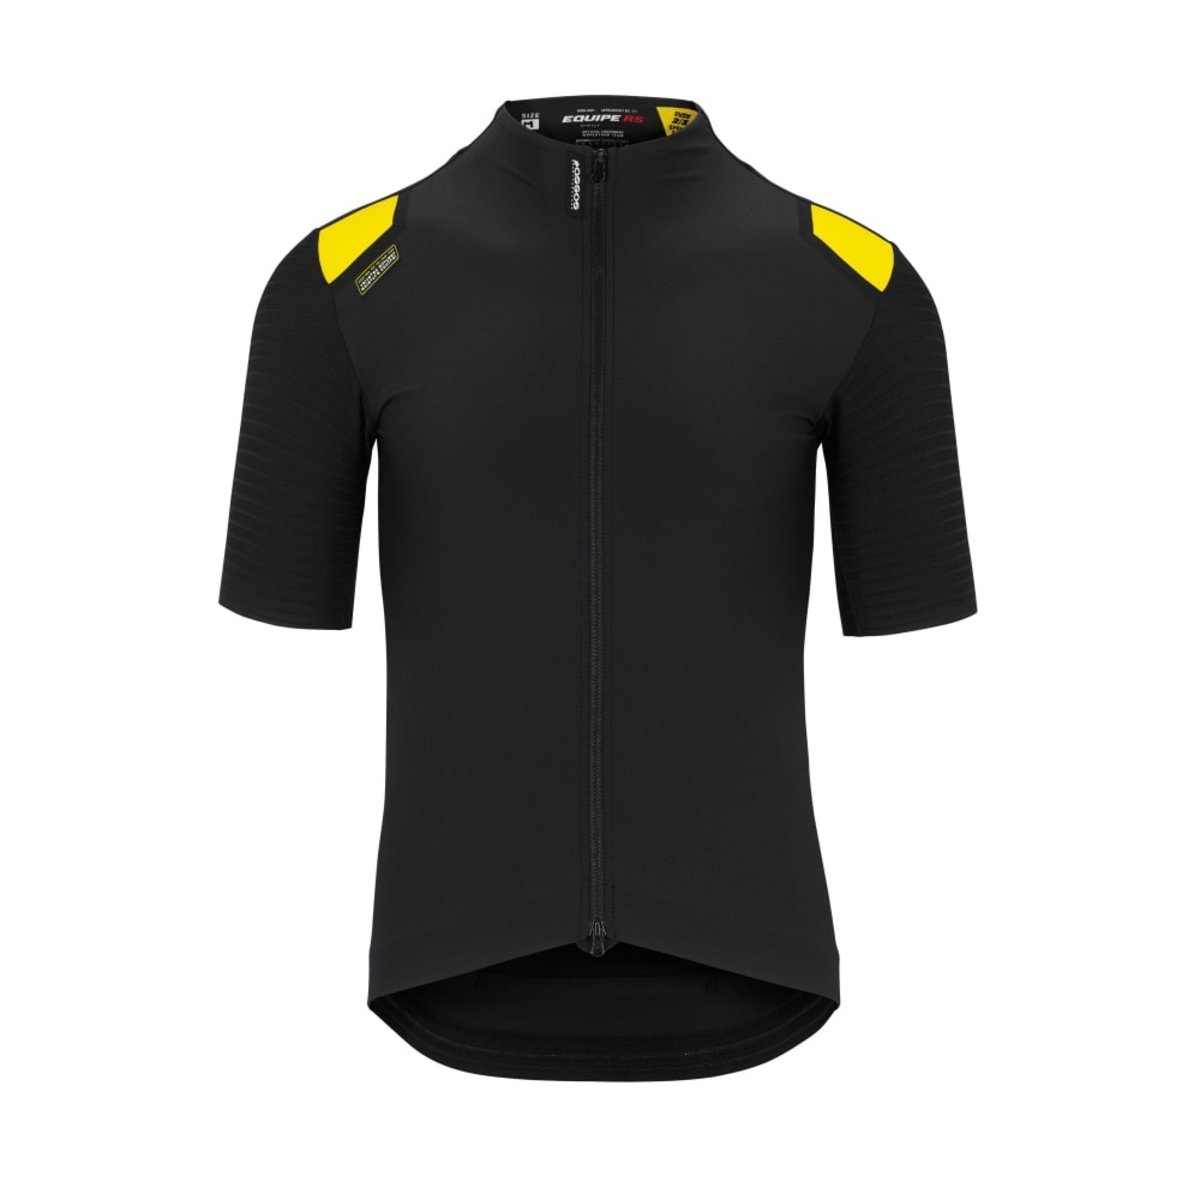 Джерси ASSOS Equipe RS Spring Fall Aero SS Jersey Black Series, кор. рукав, мужское, черное с желтым, XL фото 